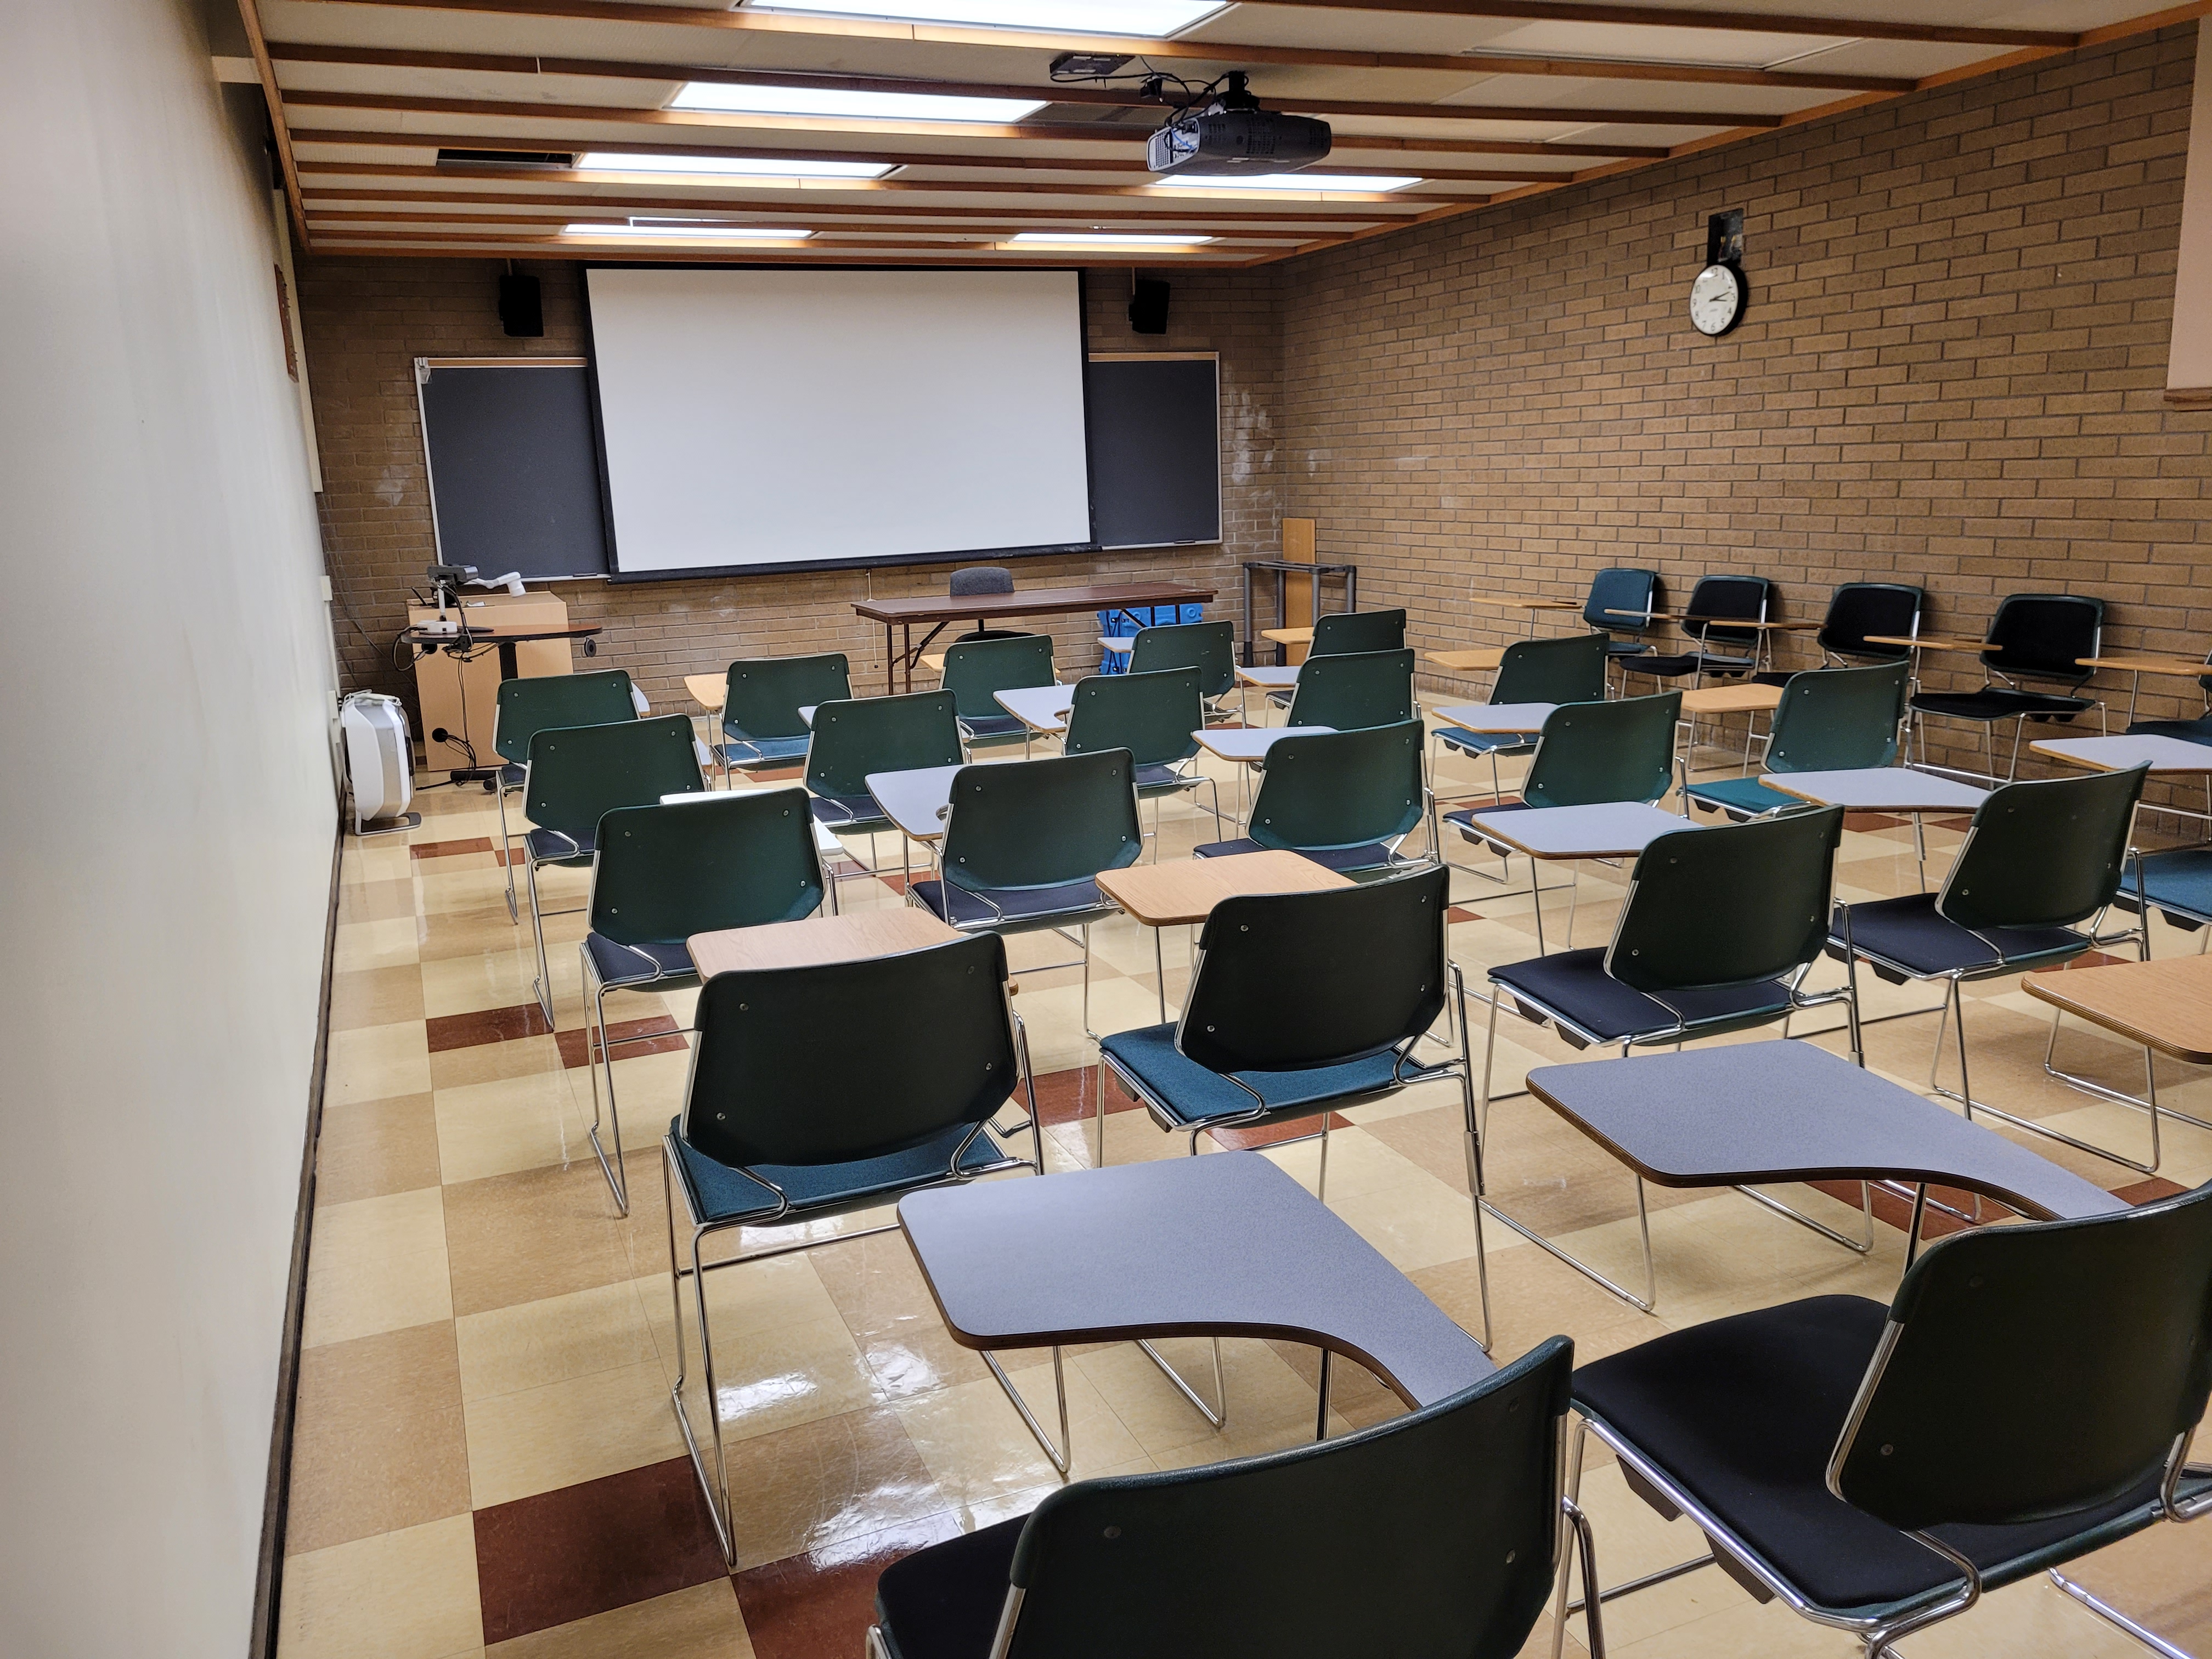 Lightboard – University Center for Teaching and Learning